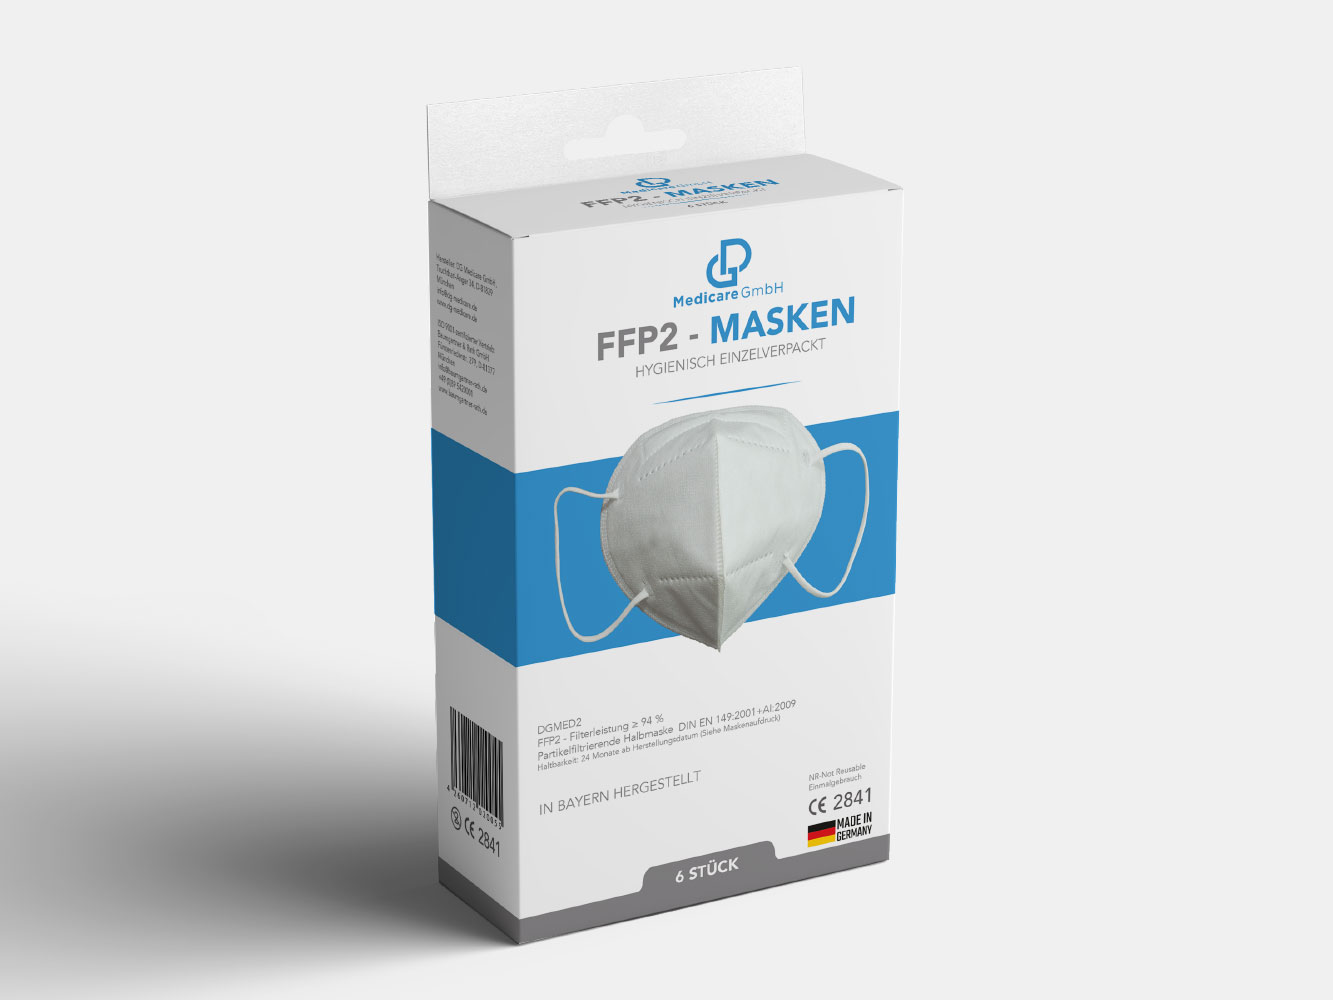 FFP2-Masken made in Germany